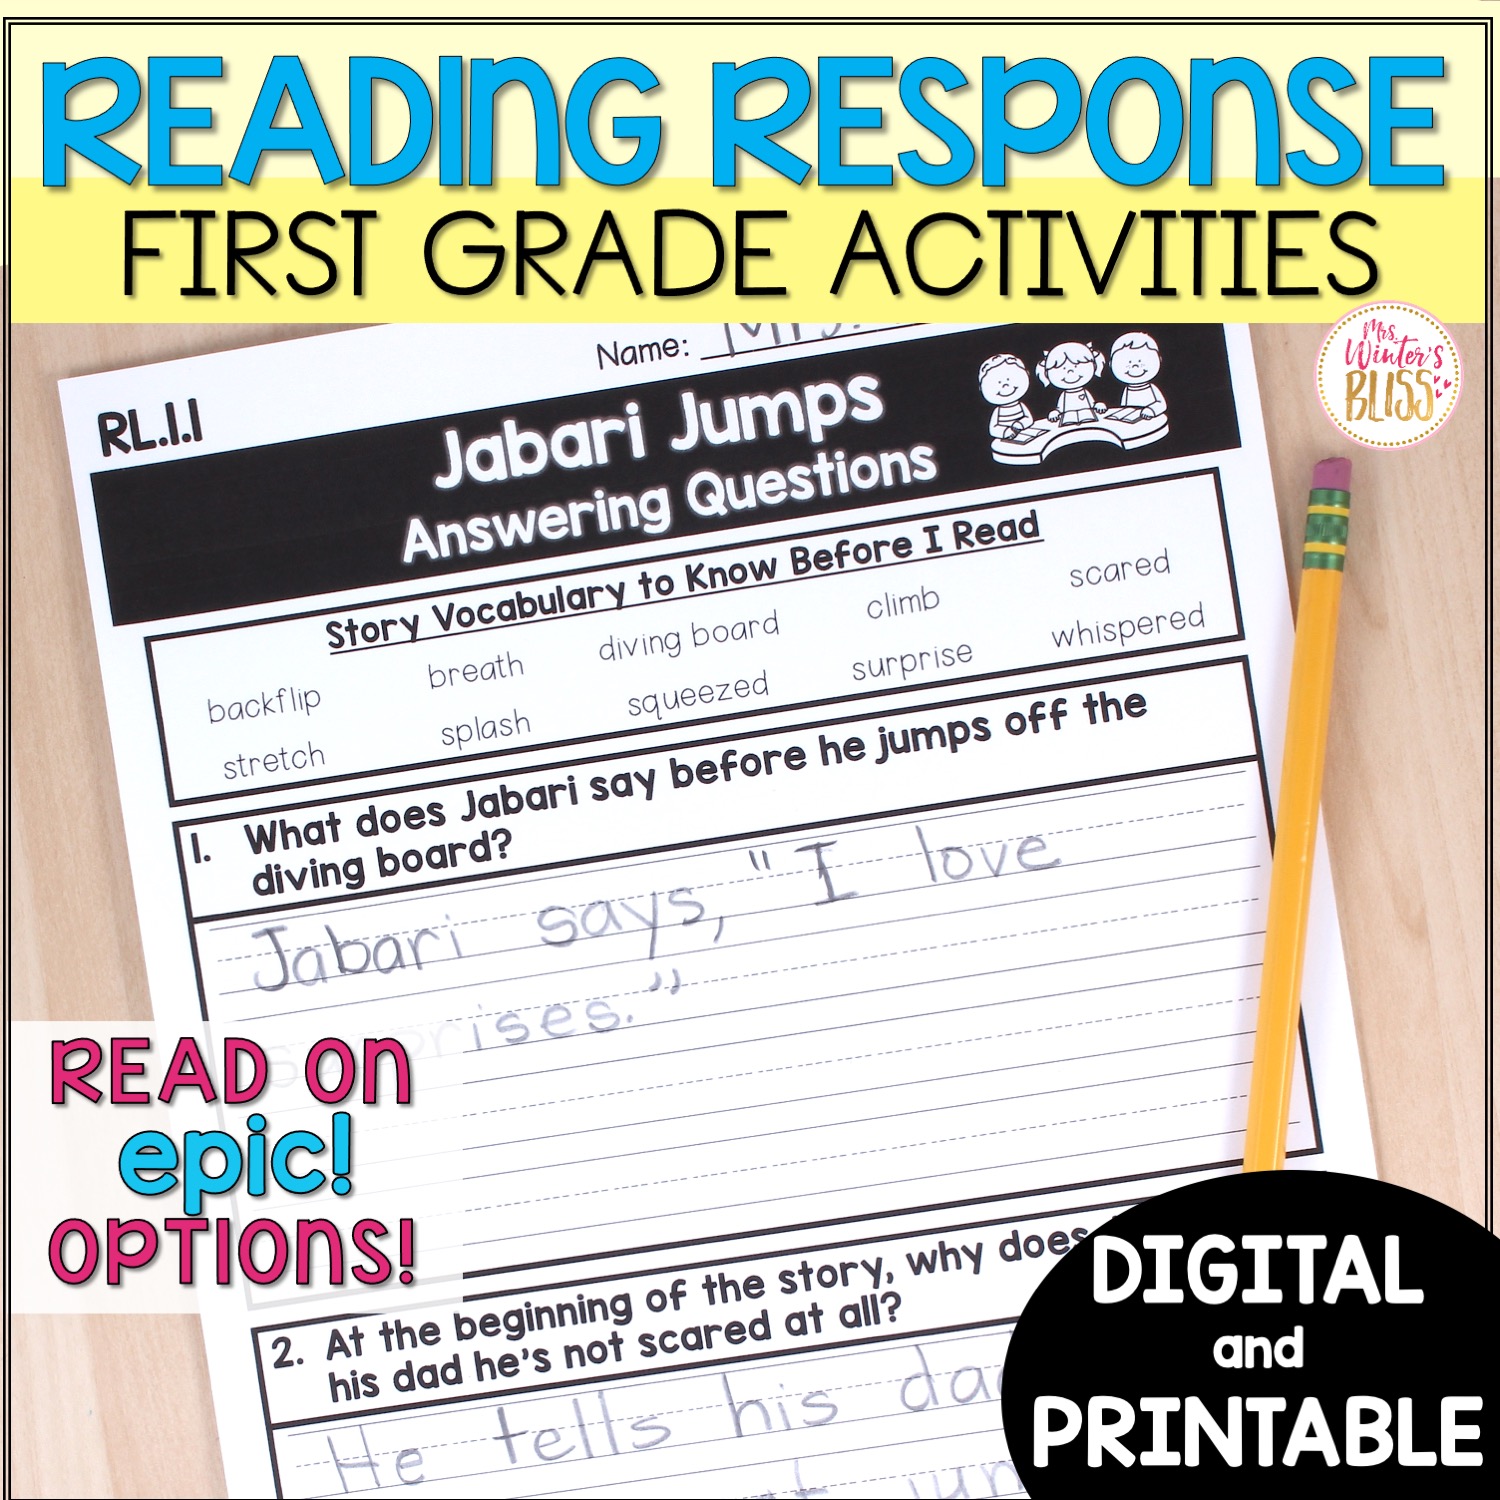 1st-grade-reading-response-activities-printable-digital-mrs-winter-s-bliss